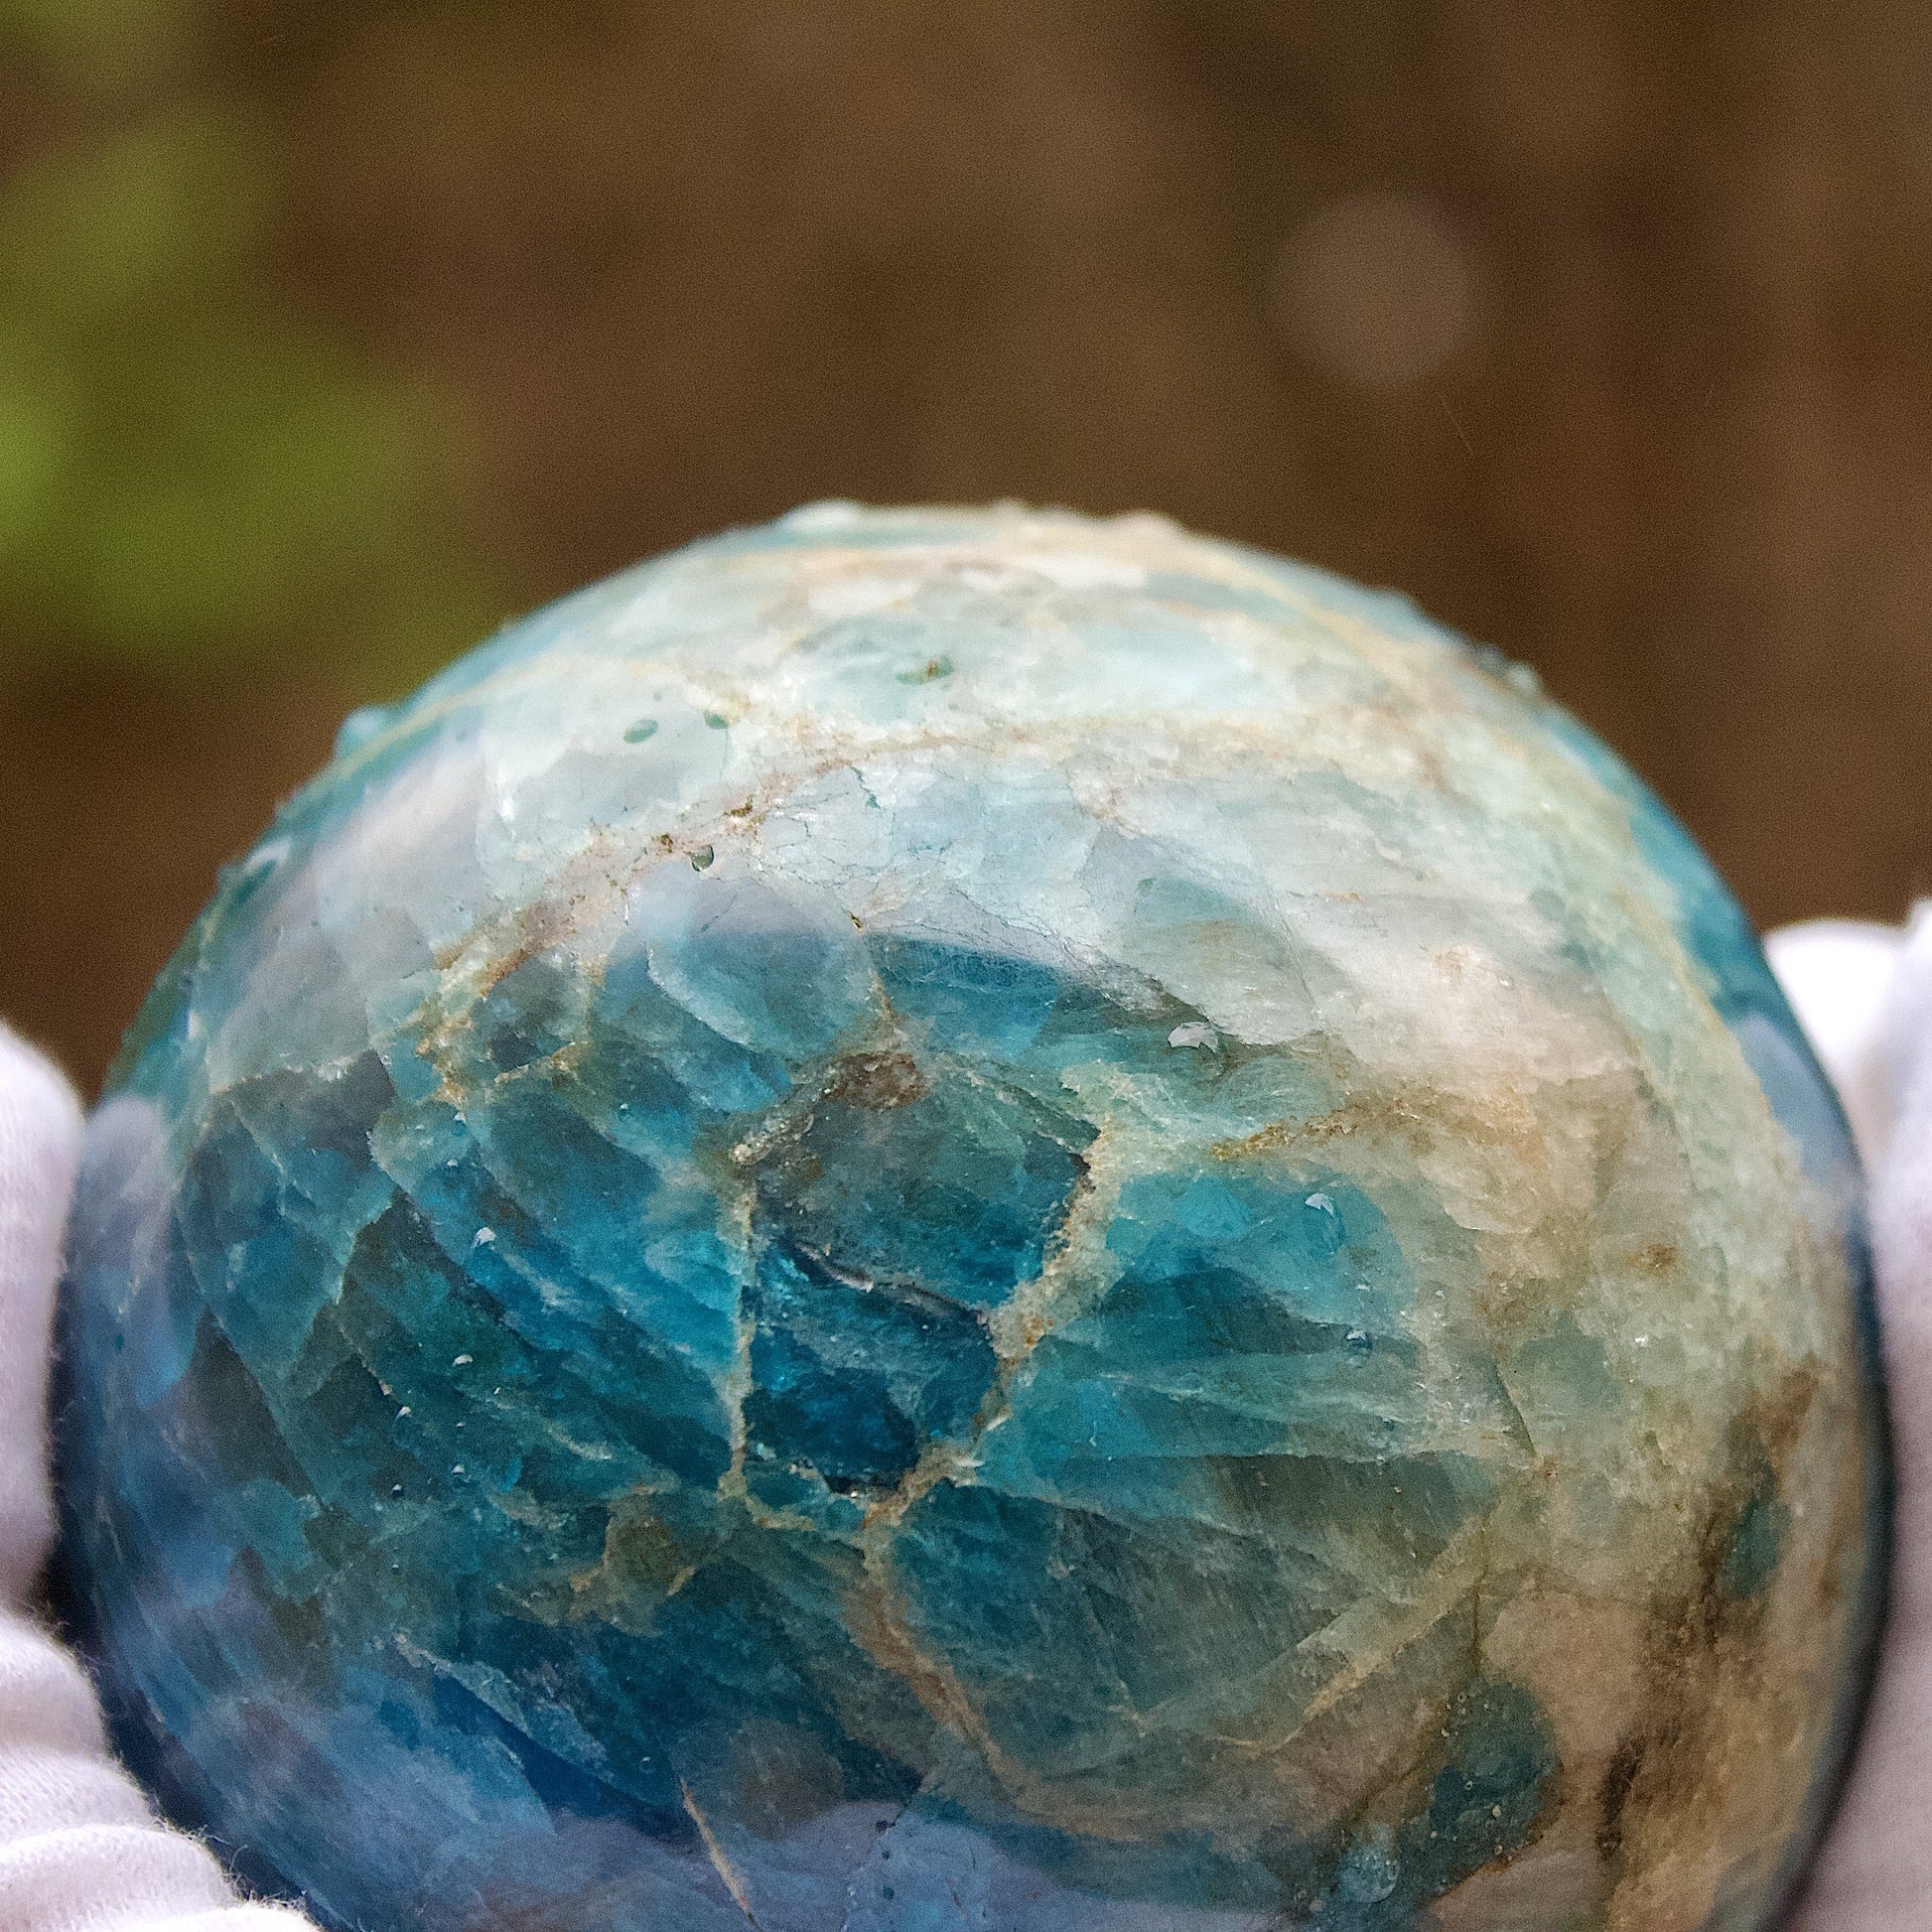 blue apatite polished sphere